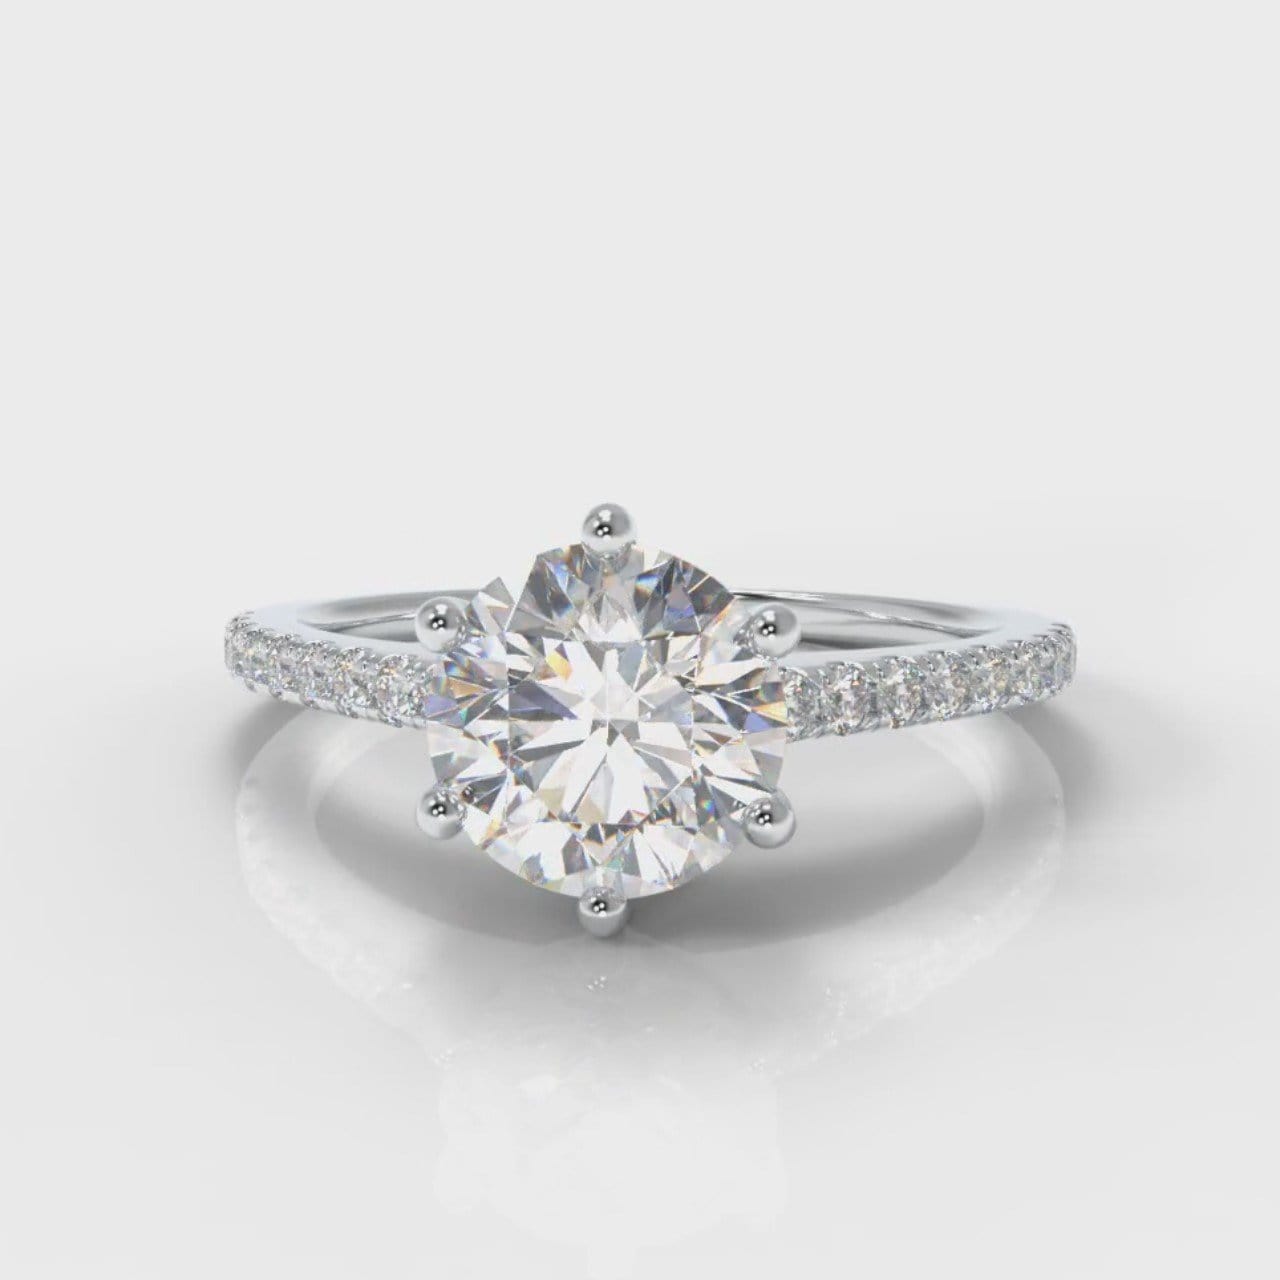 Star Petite Micropavé Round Brilliant Cut Diamond Engagement Ring